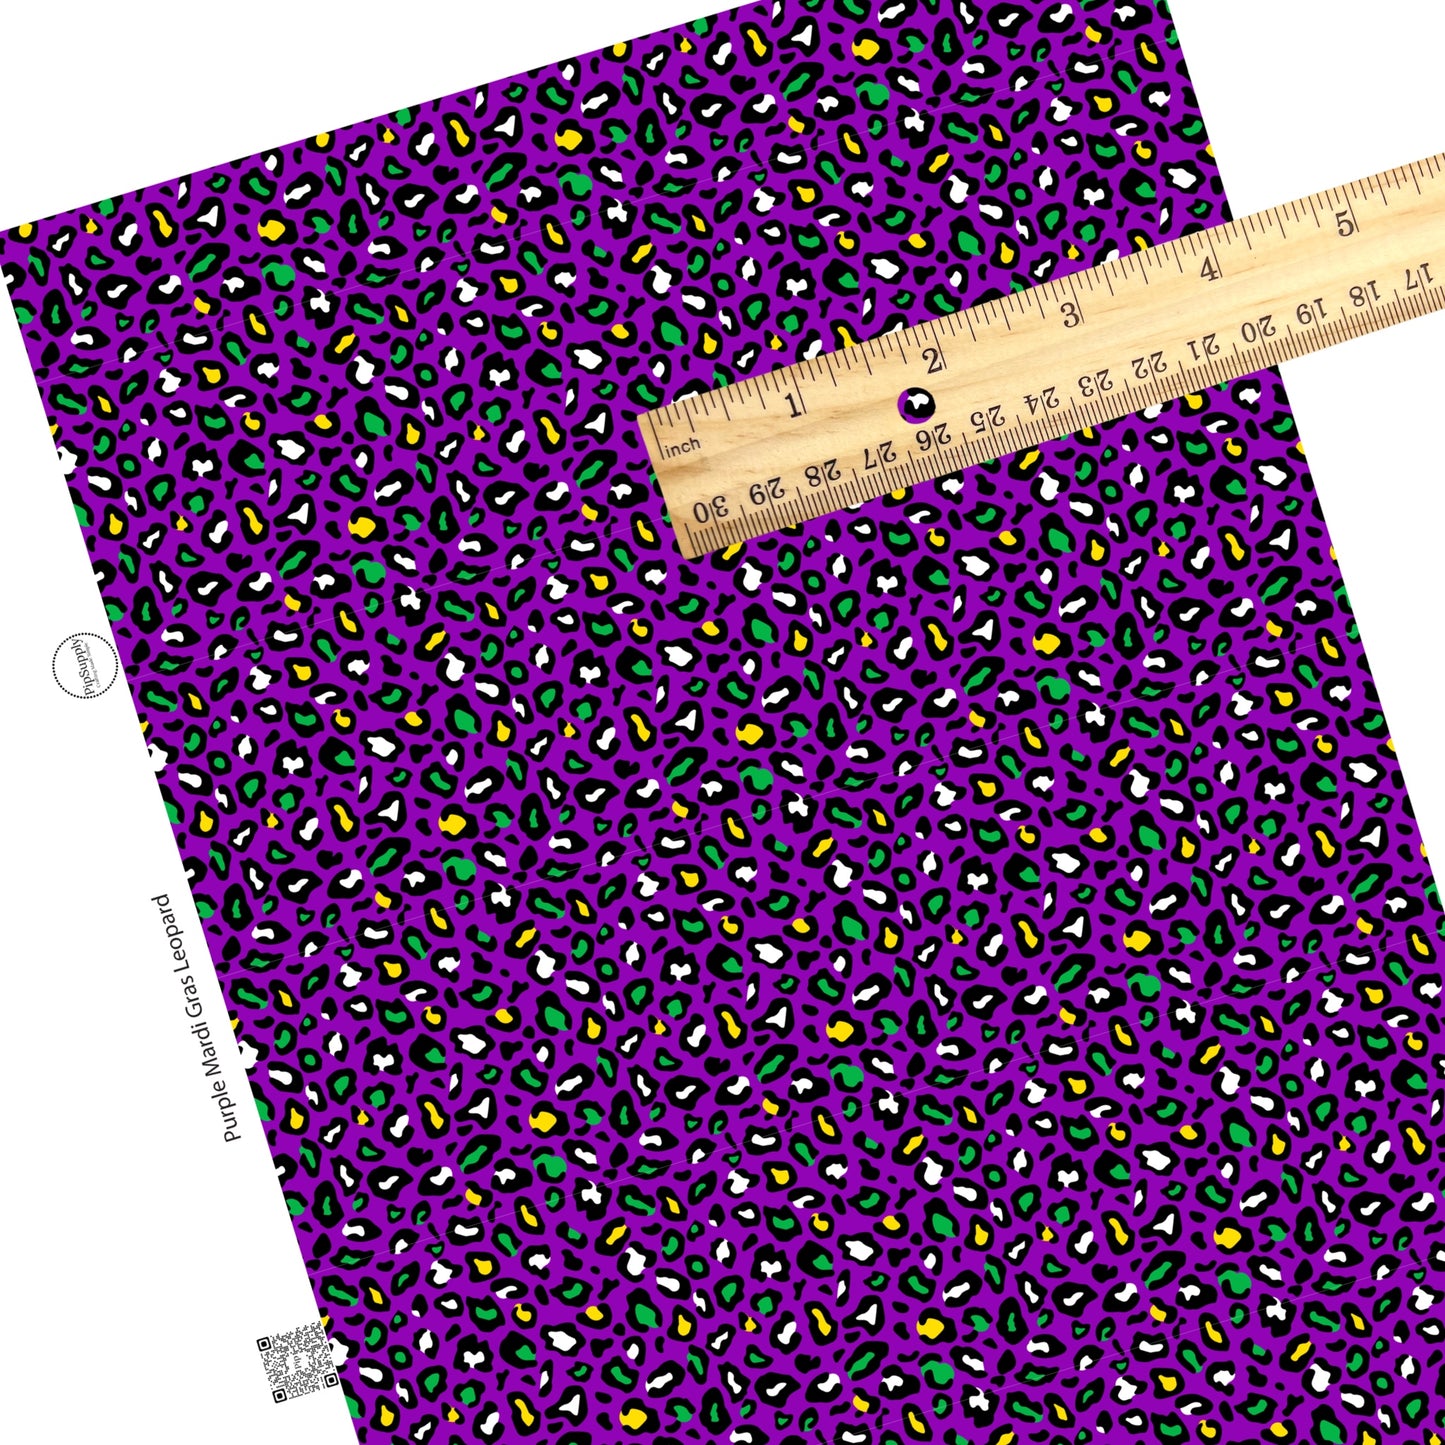 Leopard print on purple faux leather sheets